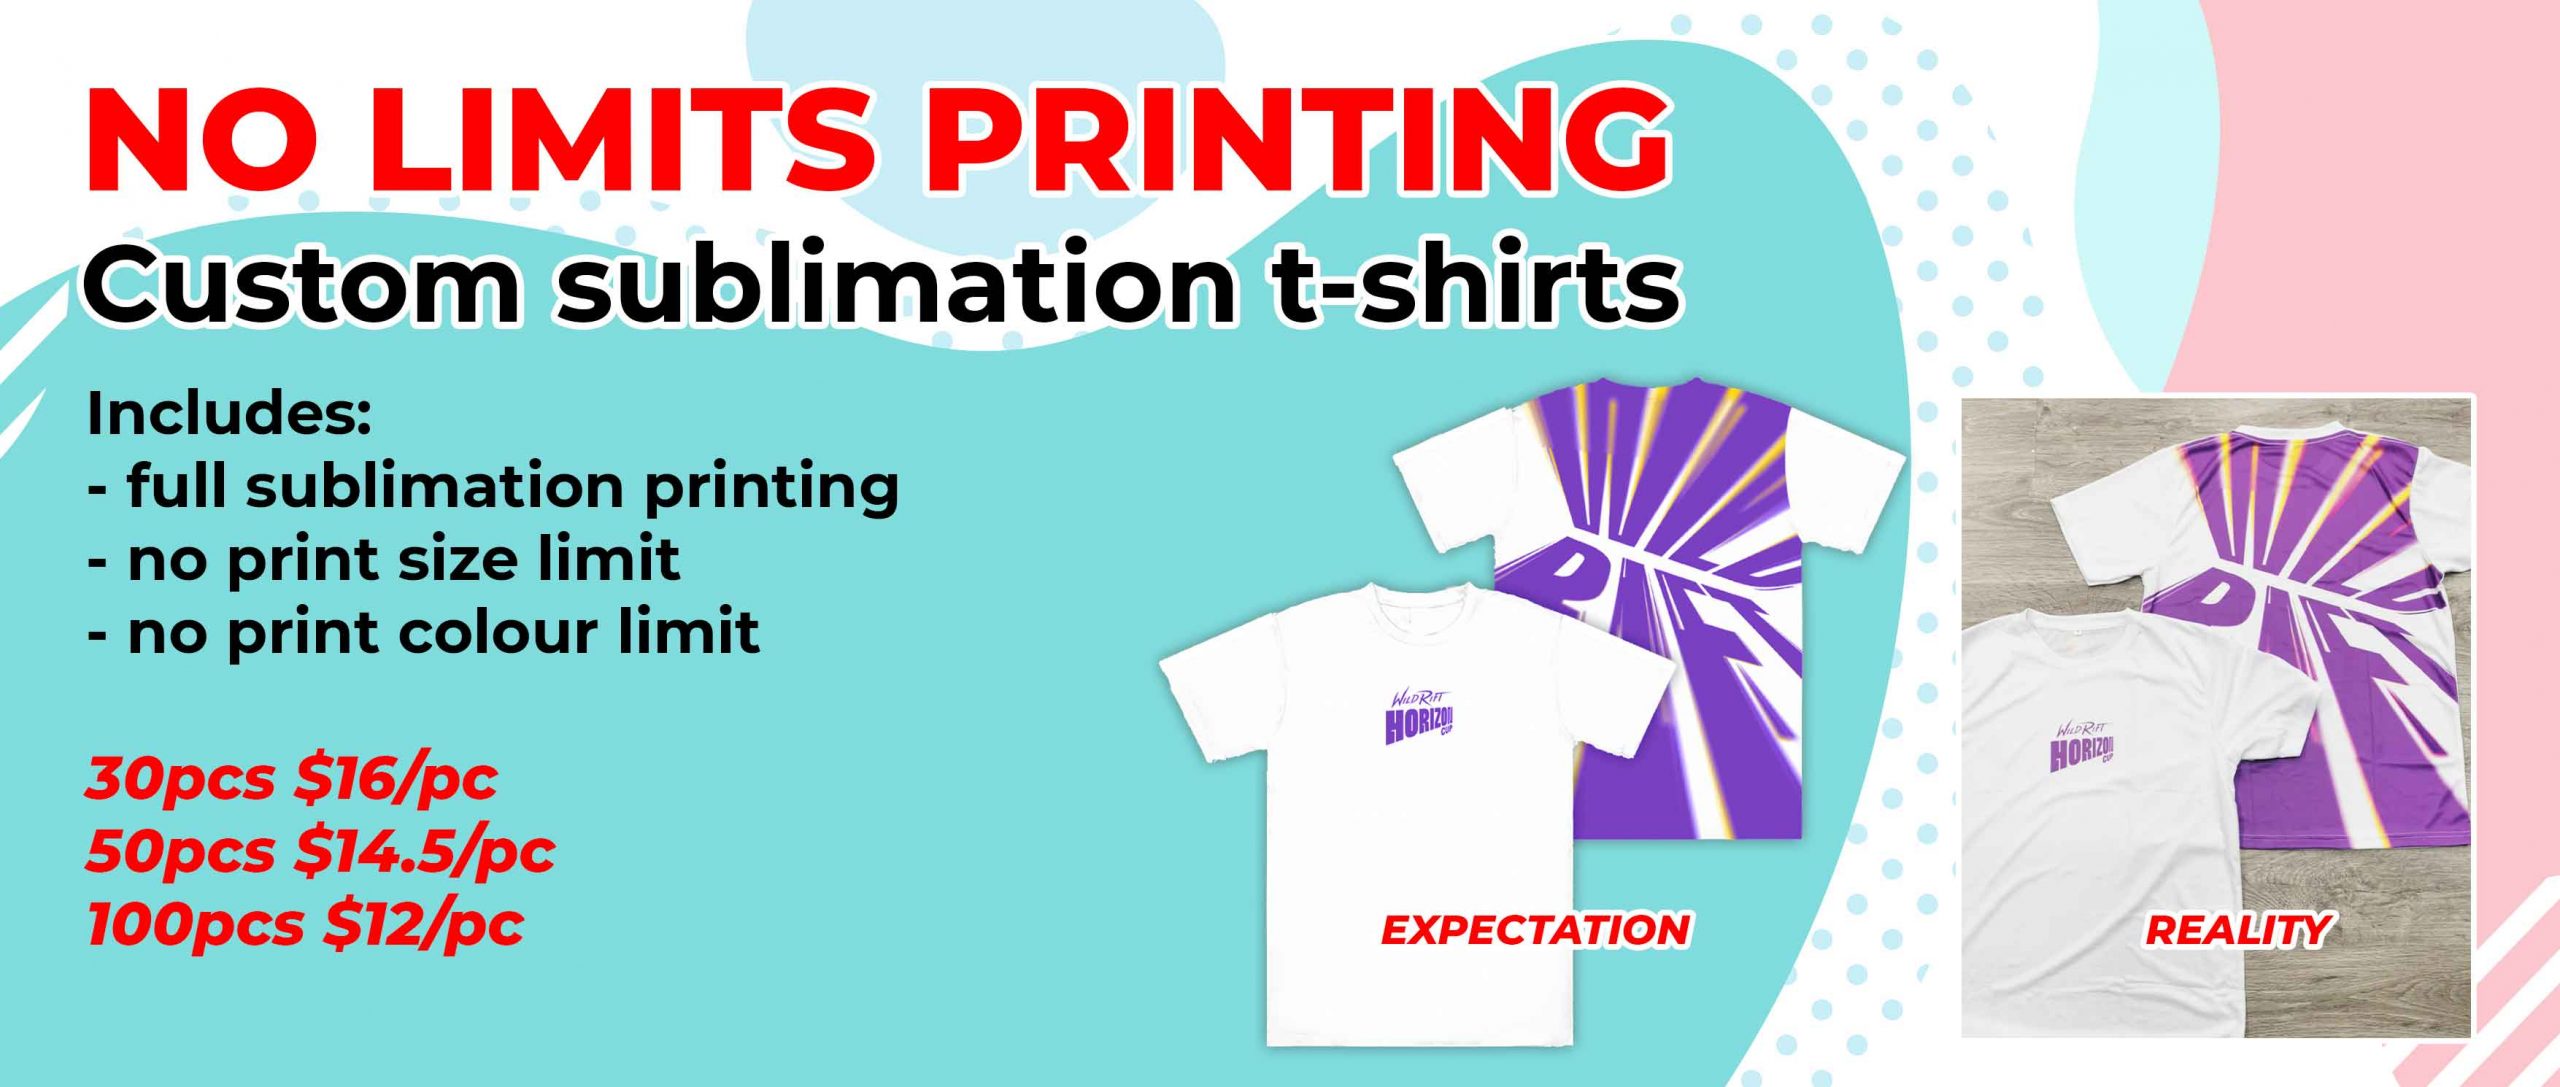 custom-sublimation-t-shirt-printing